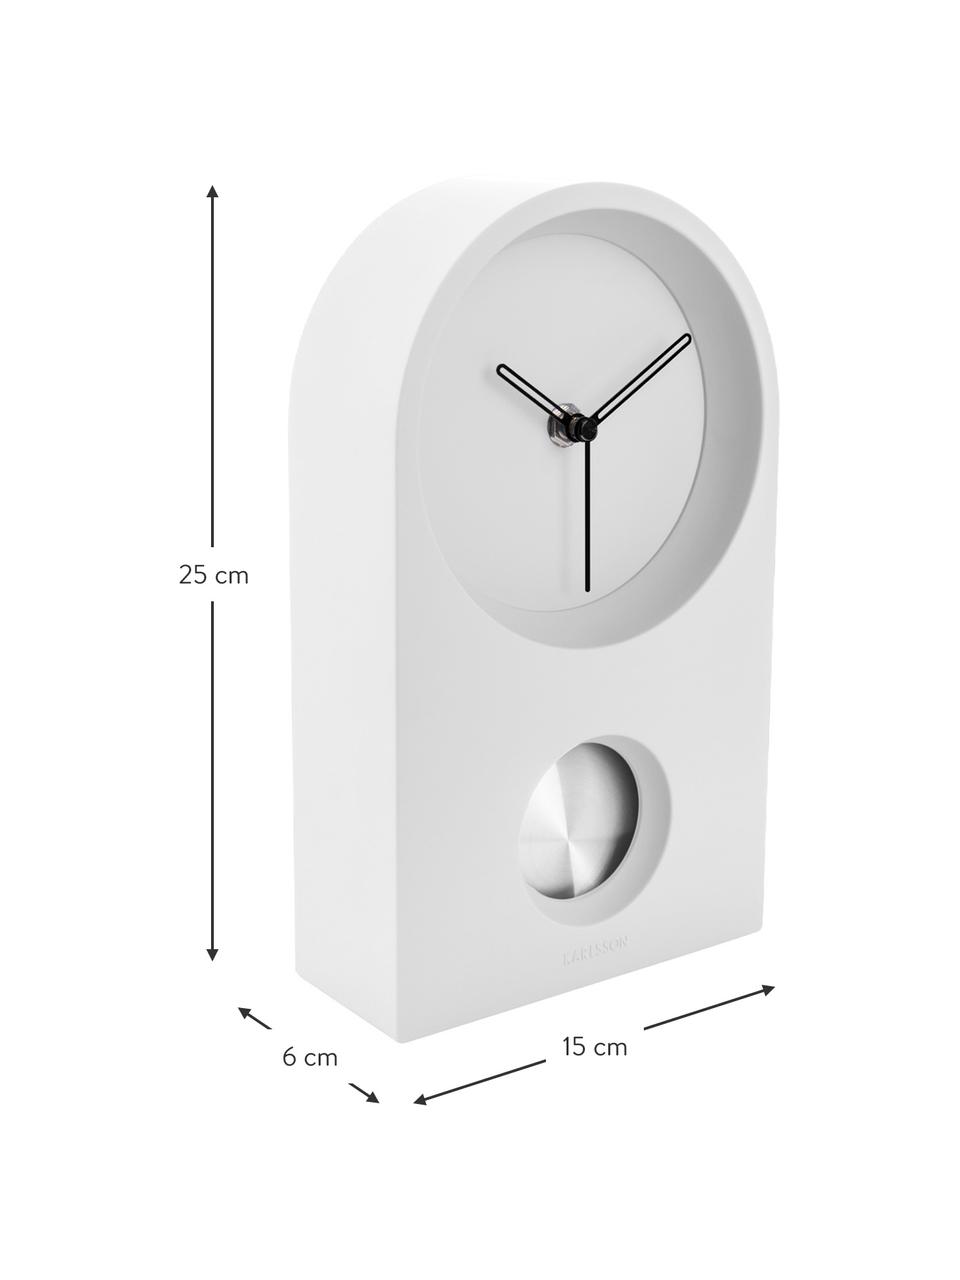 Orologio da tavolo Taut, Materiale sintetico (ABS), Bianco, argento, nero, Larg. 15 x Alt. 25 cm